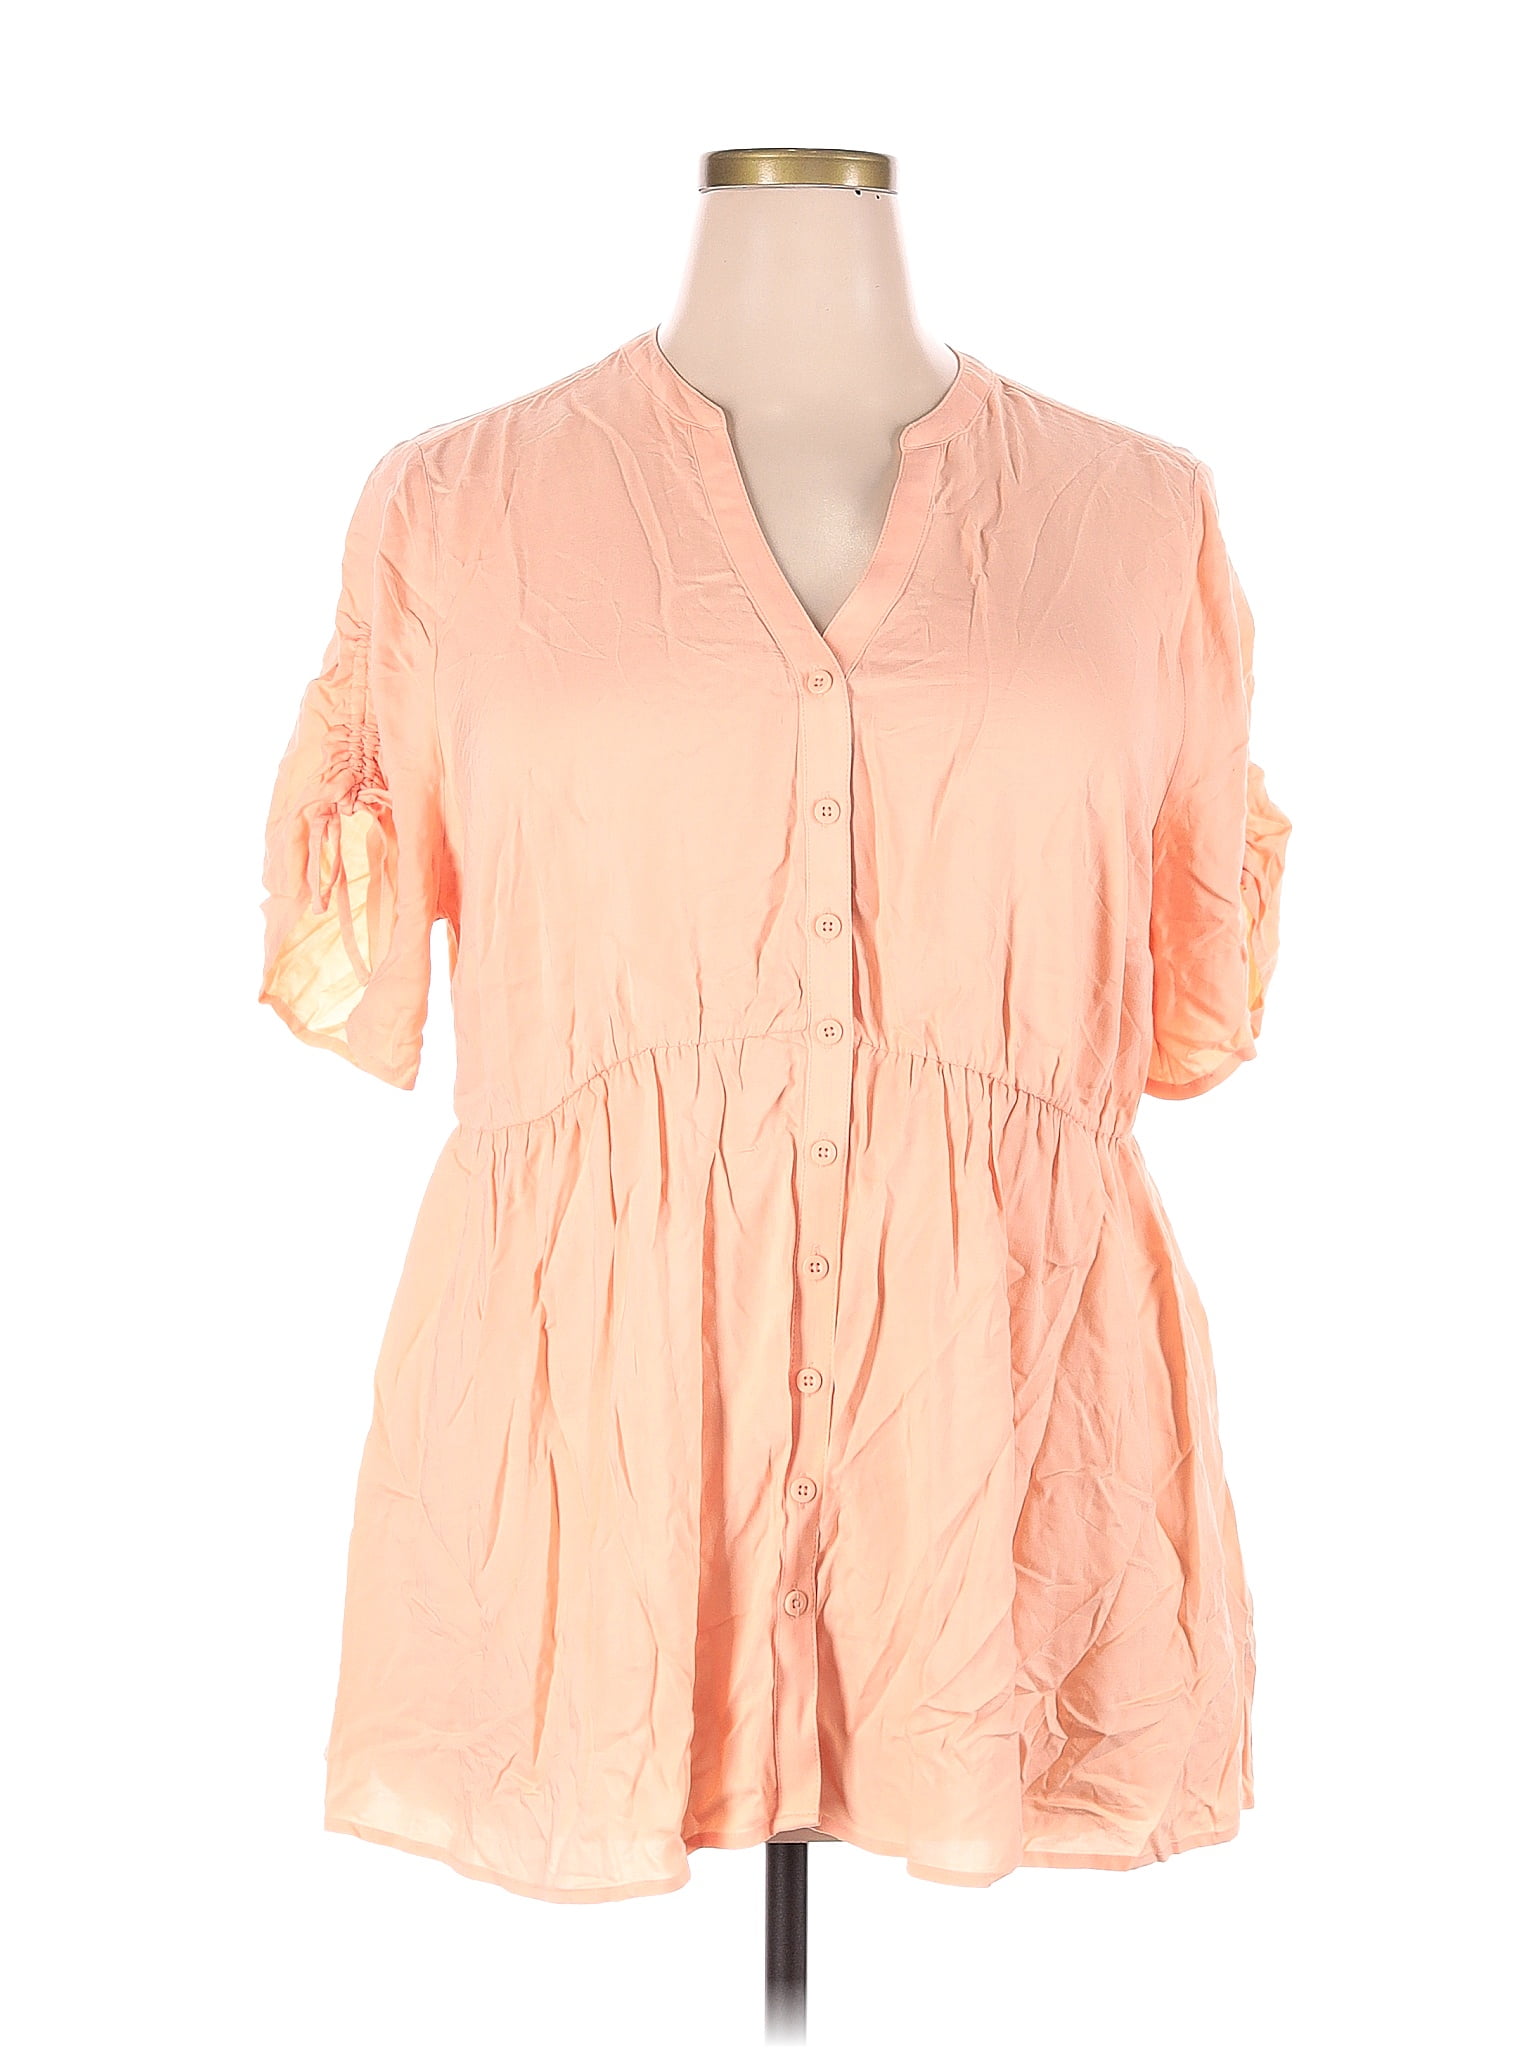 Torrid 100% Rayon Solid Pink Orange 3/4 Sleeve Top Size 2X Plus (2